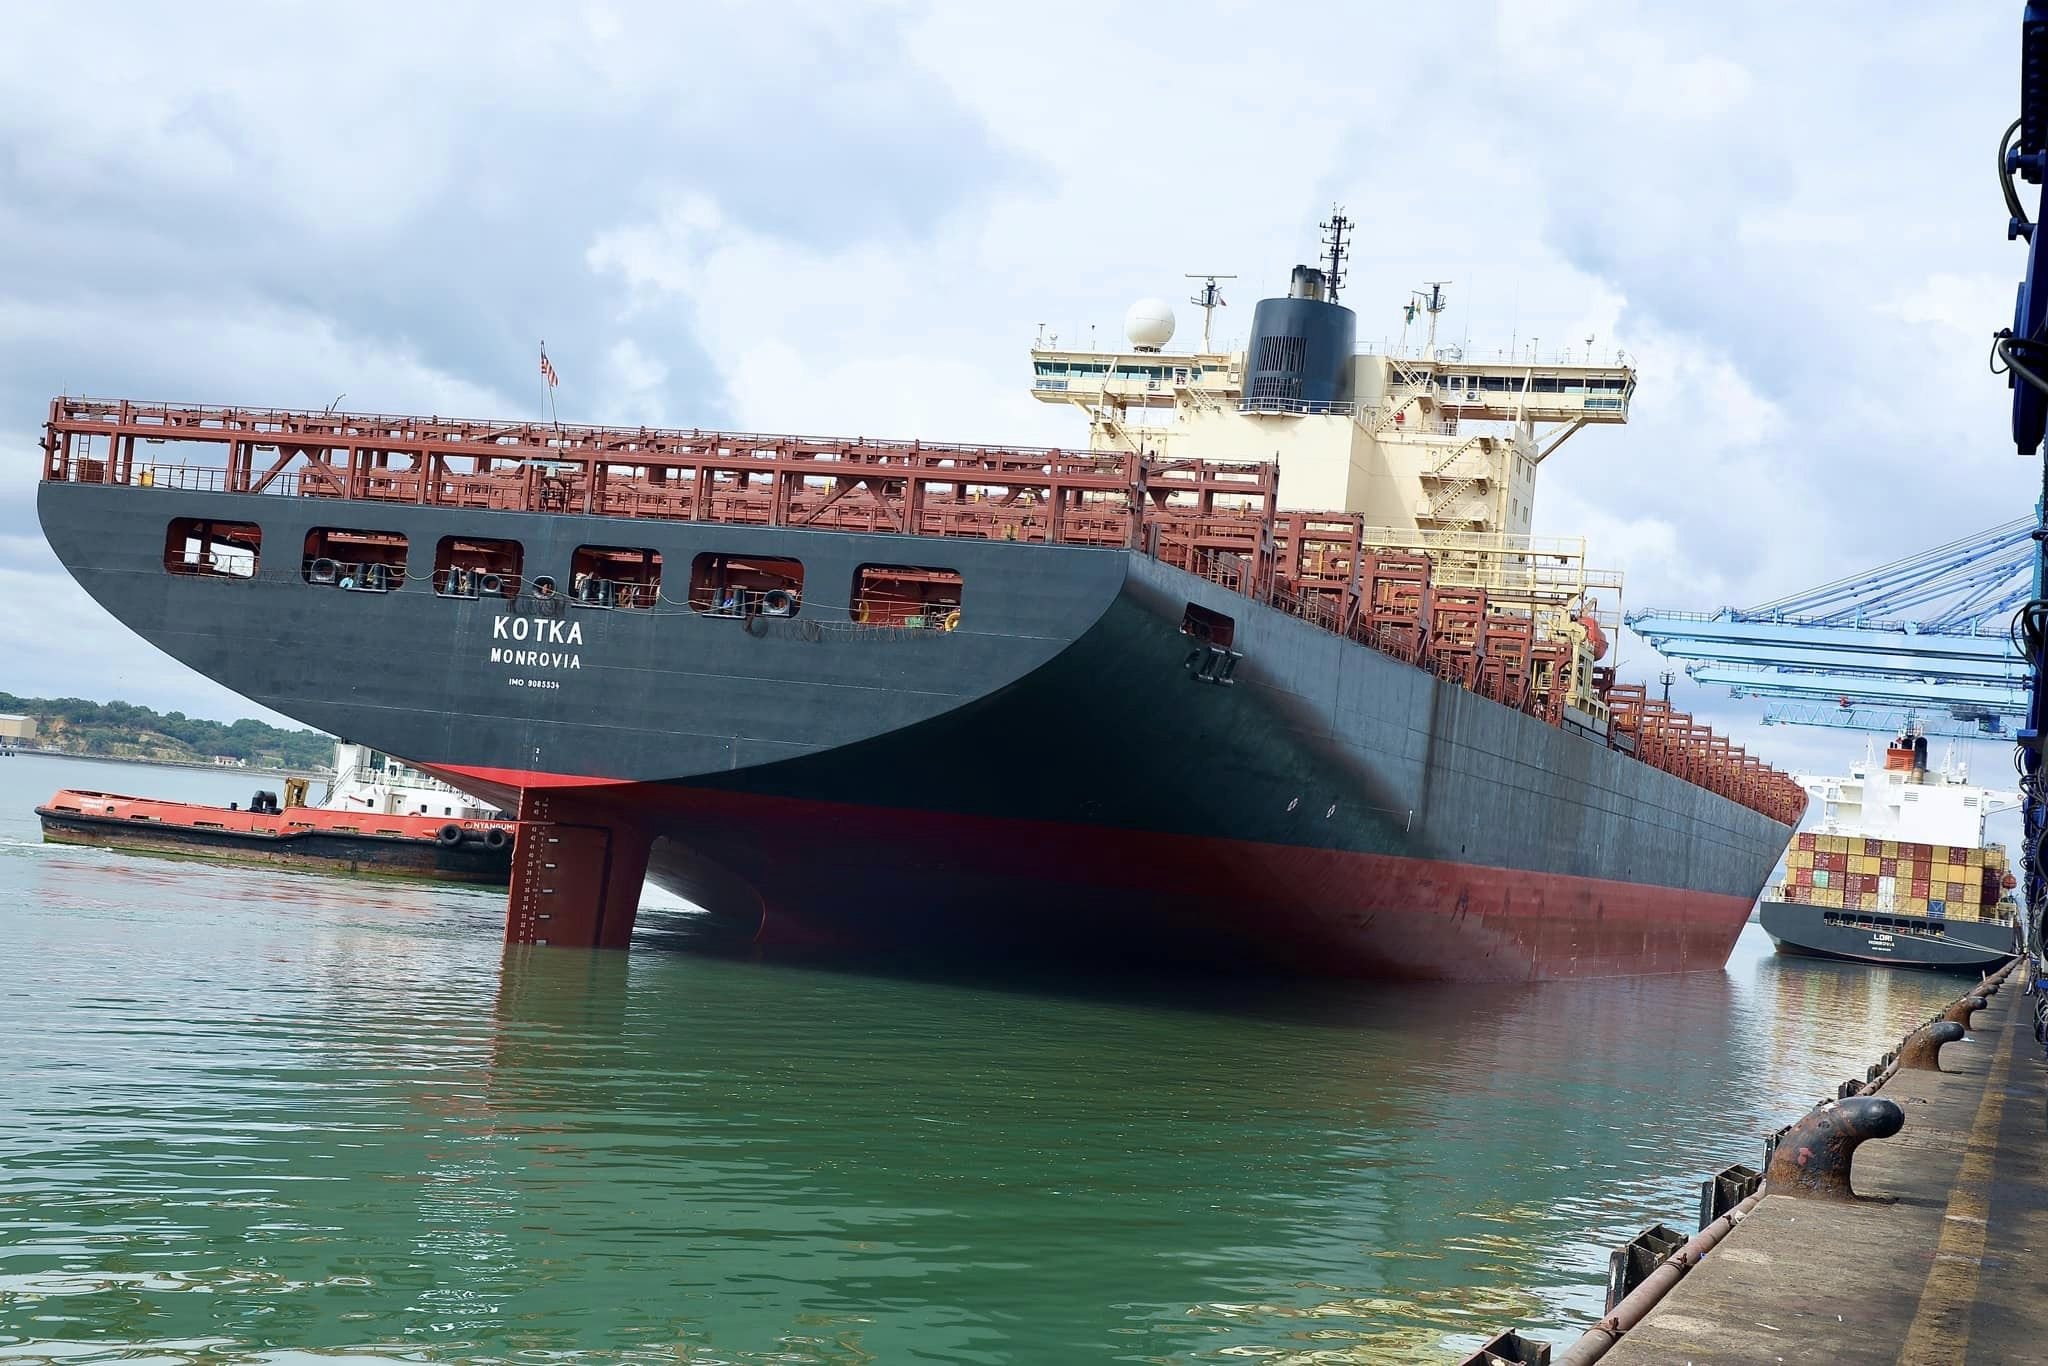 Longest container ship, MV Kotka, docks at Mombasa Port